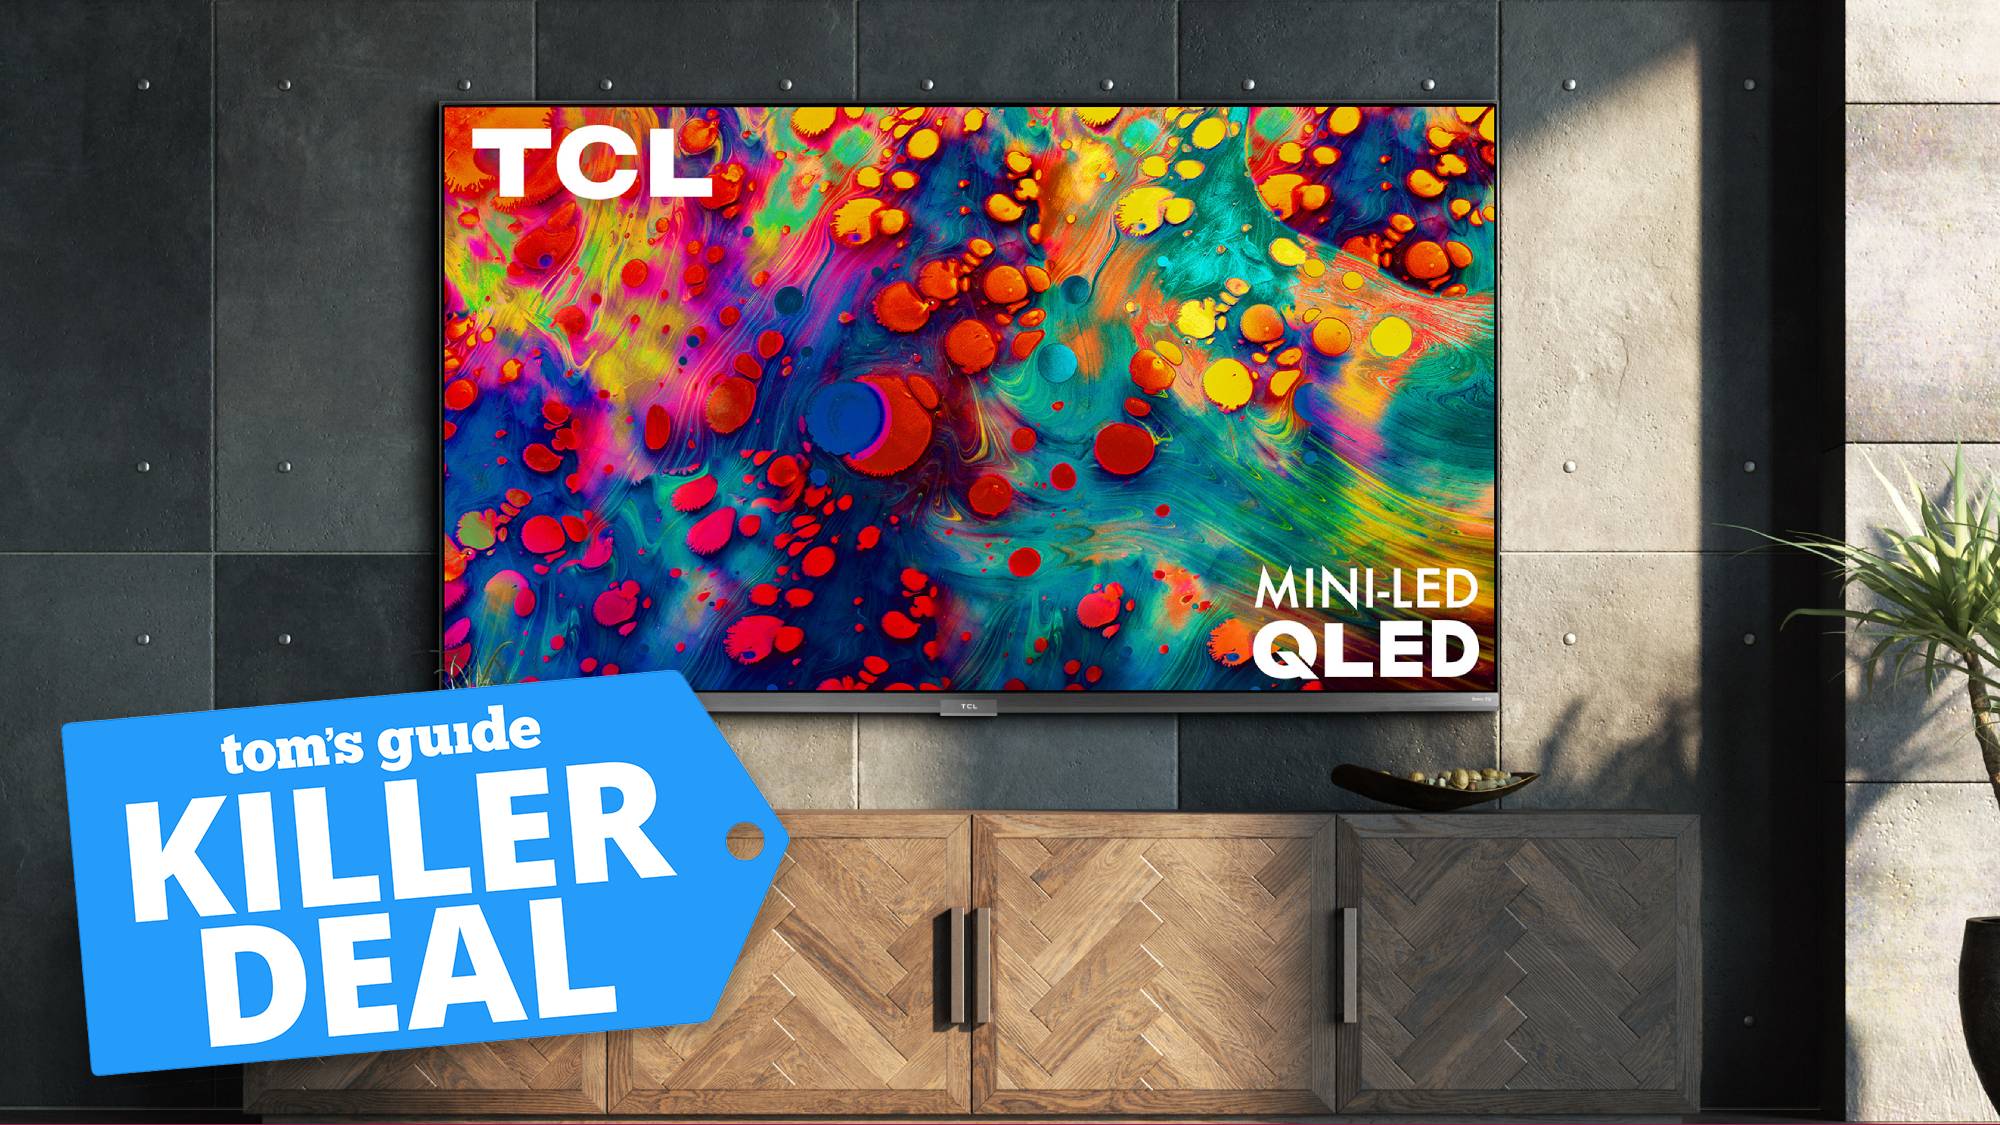 TCL 6-Series 4K TV con una etiqueta de oferta de Tom's Guide